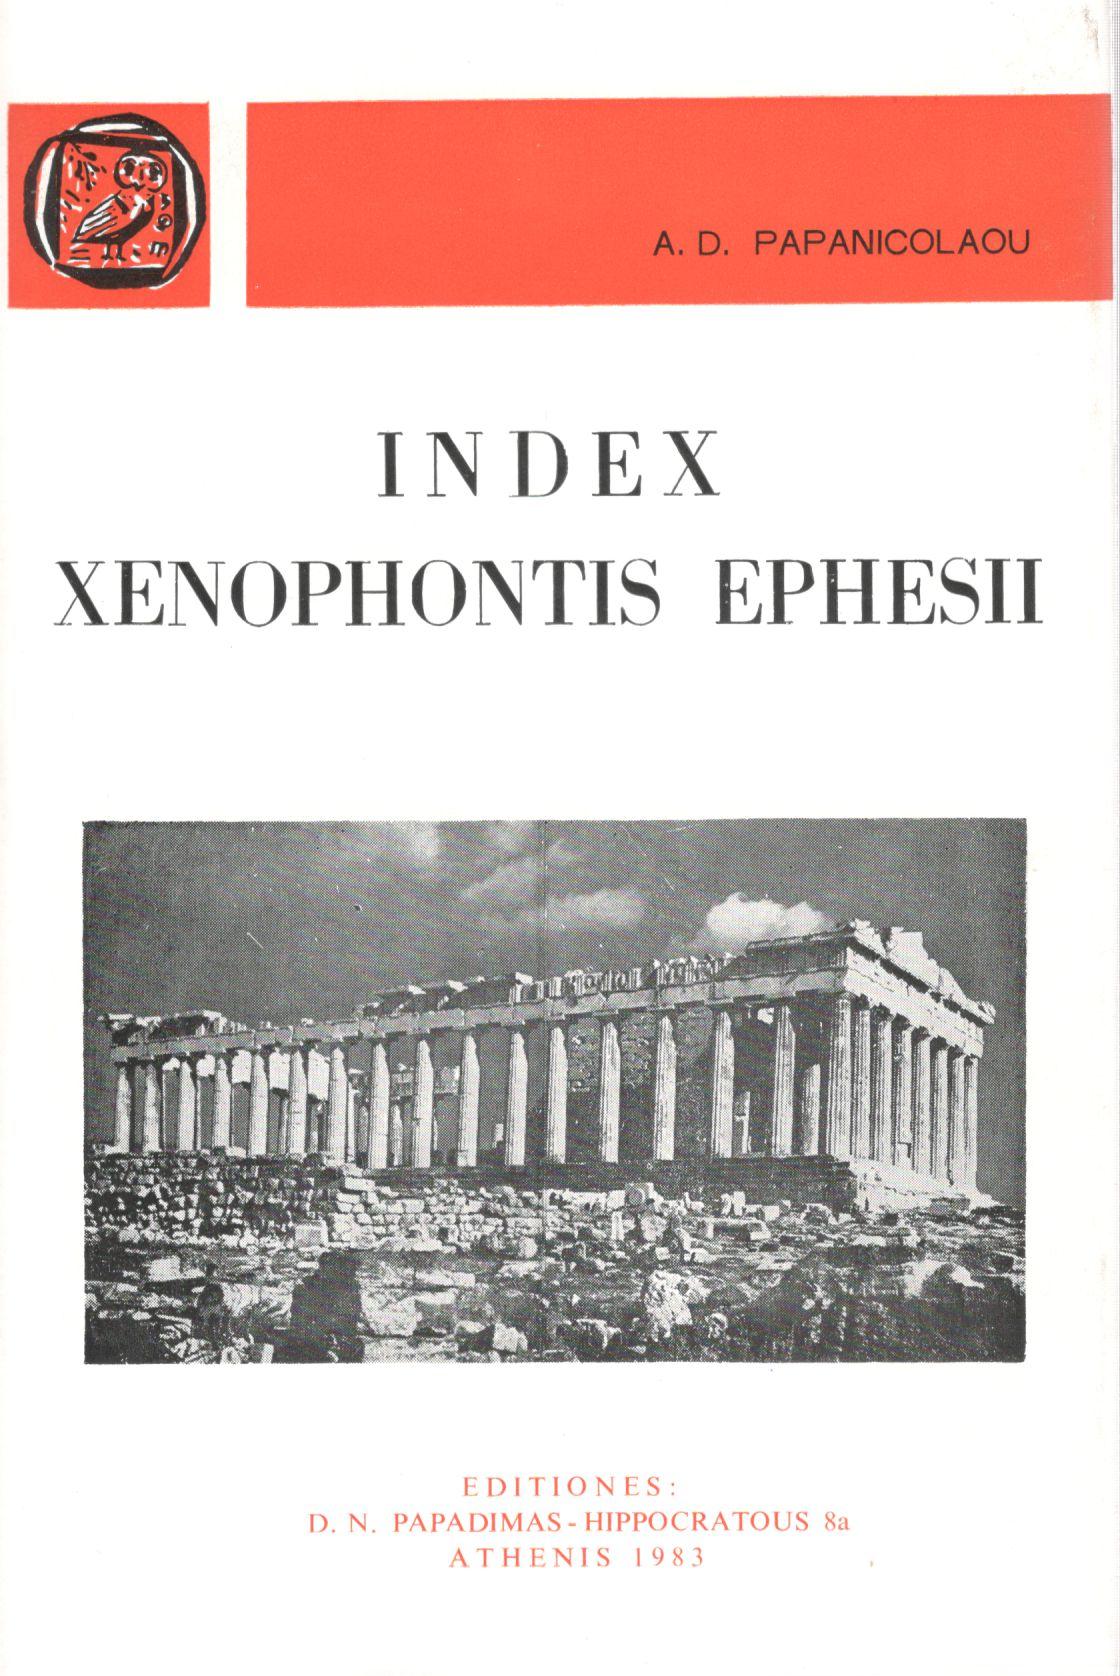 Xenophontis, Ephesii Index, [Ξενοφώντος Εφεσίου, Ευρετήριον λέξεων]